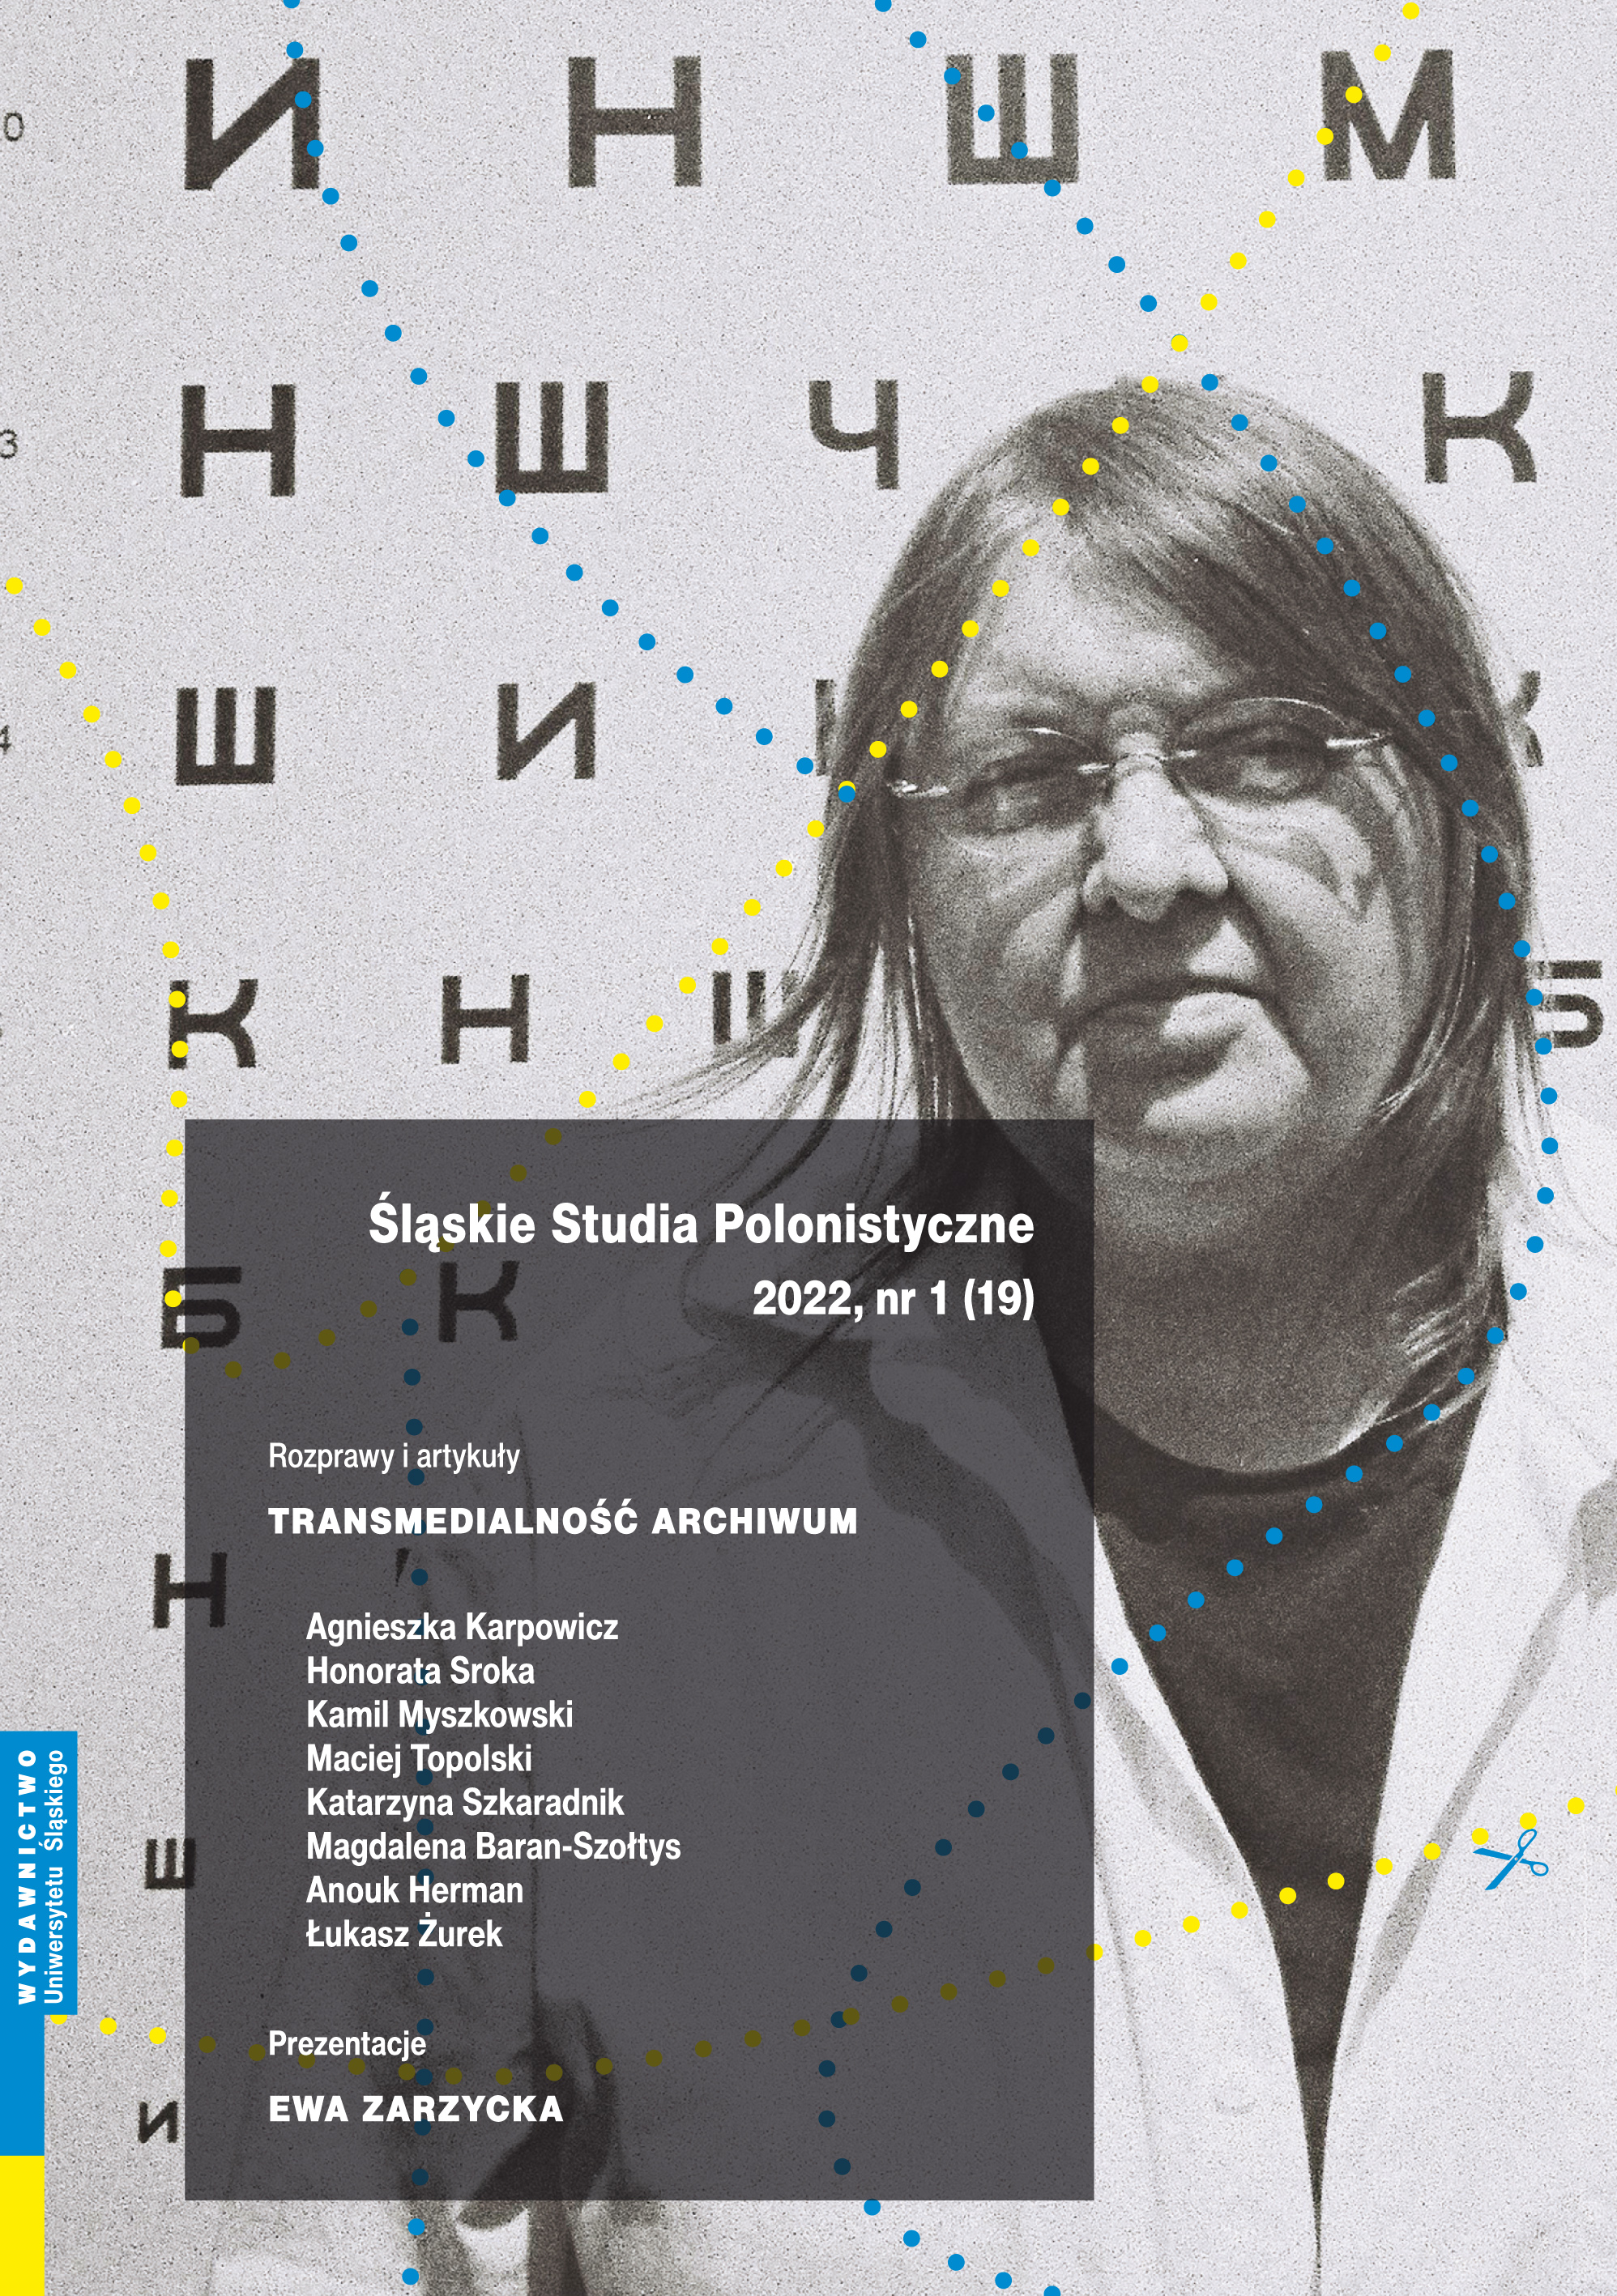 Ewa Zarzycka’s Narrations Cover Image